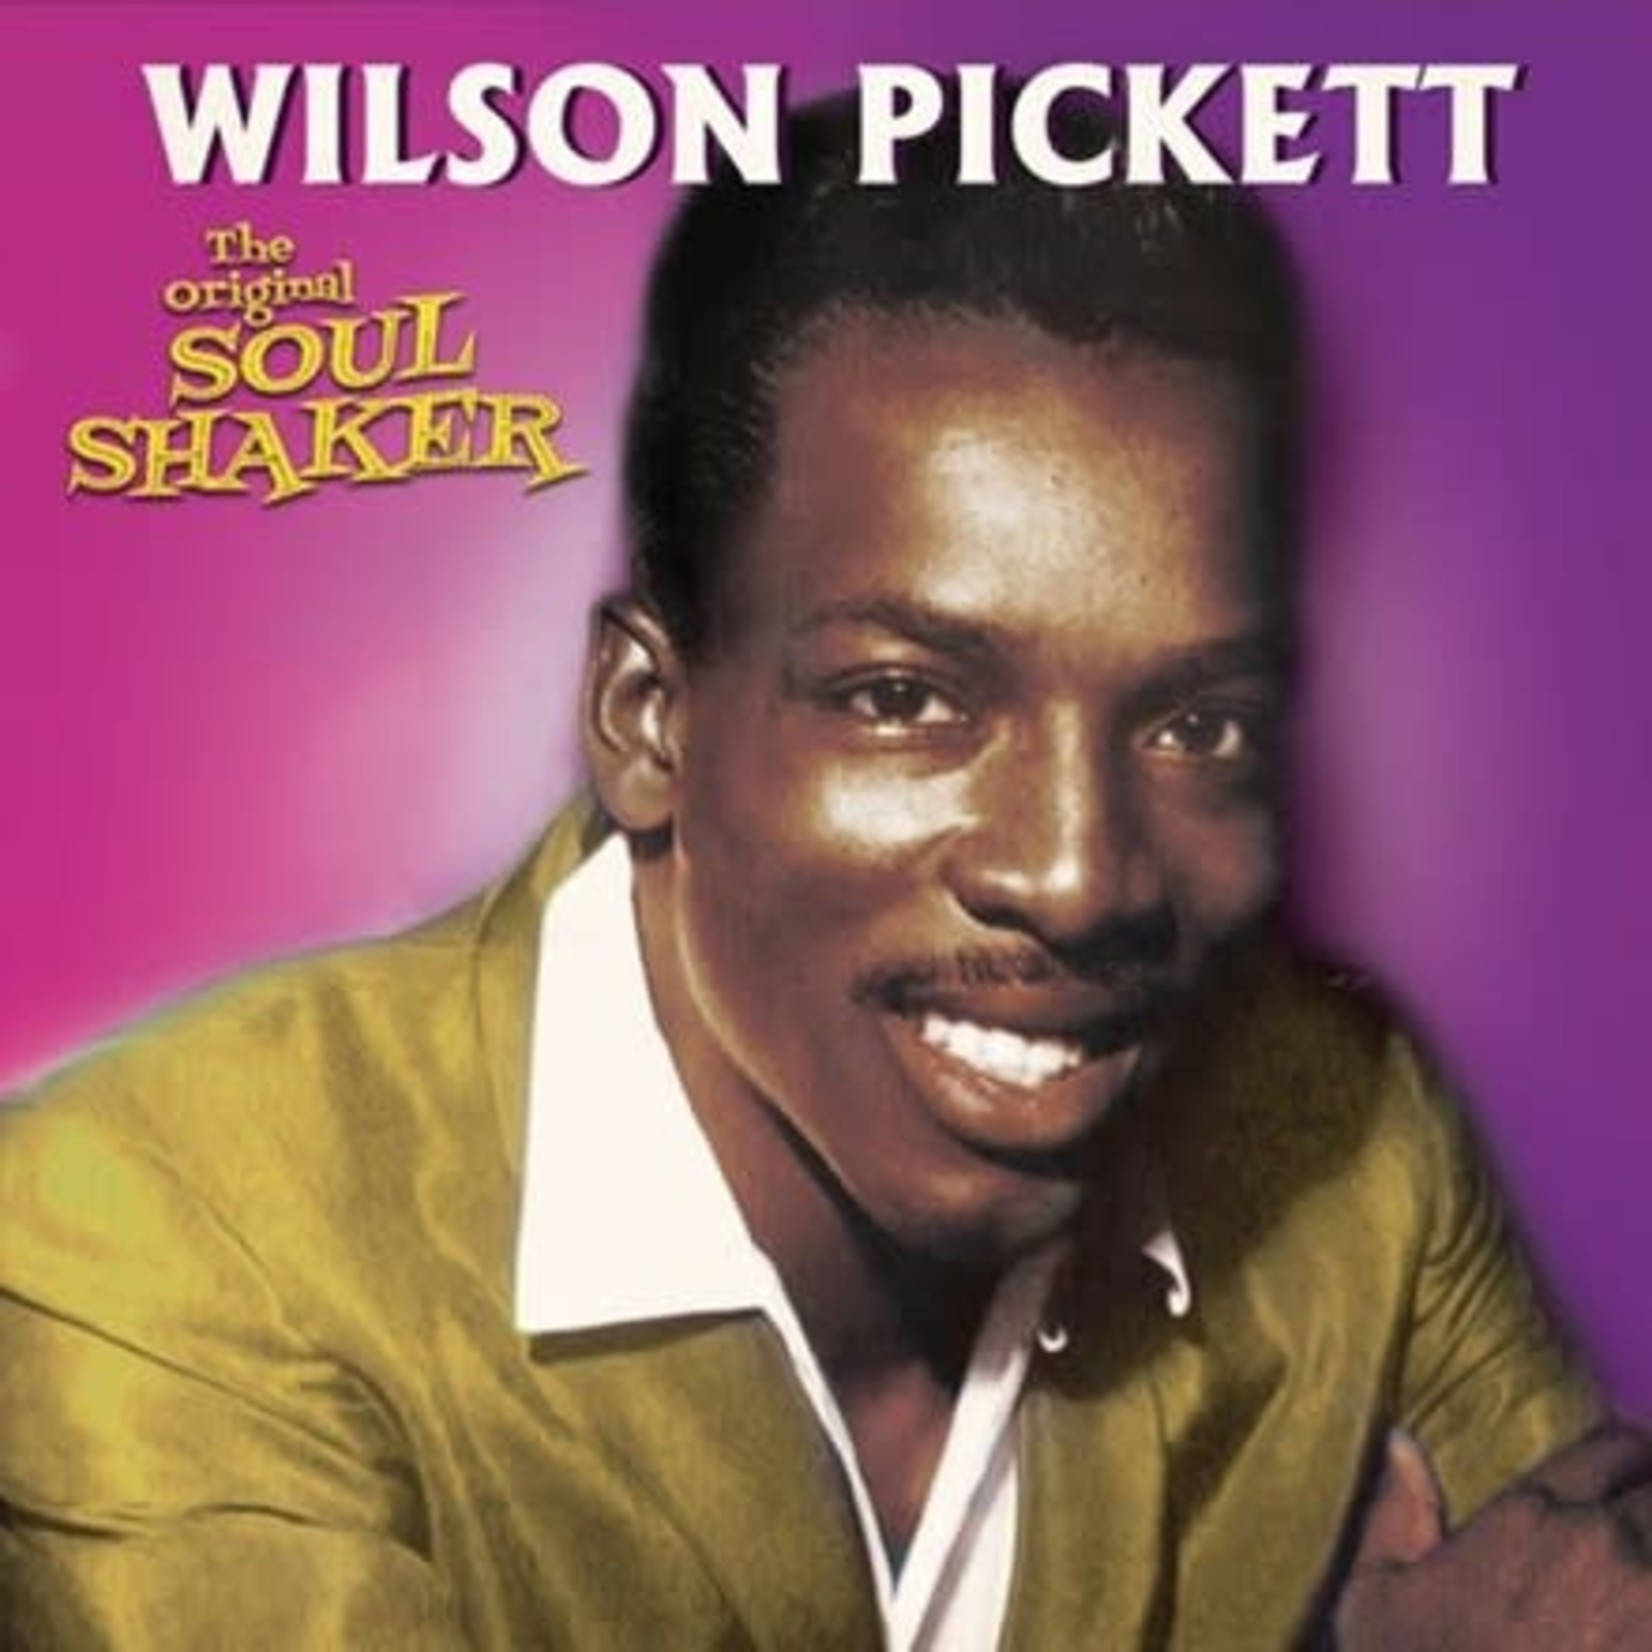 American Singer Wilson Pickett The Original Soul Shaker Wallpaper